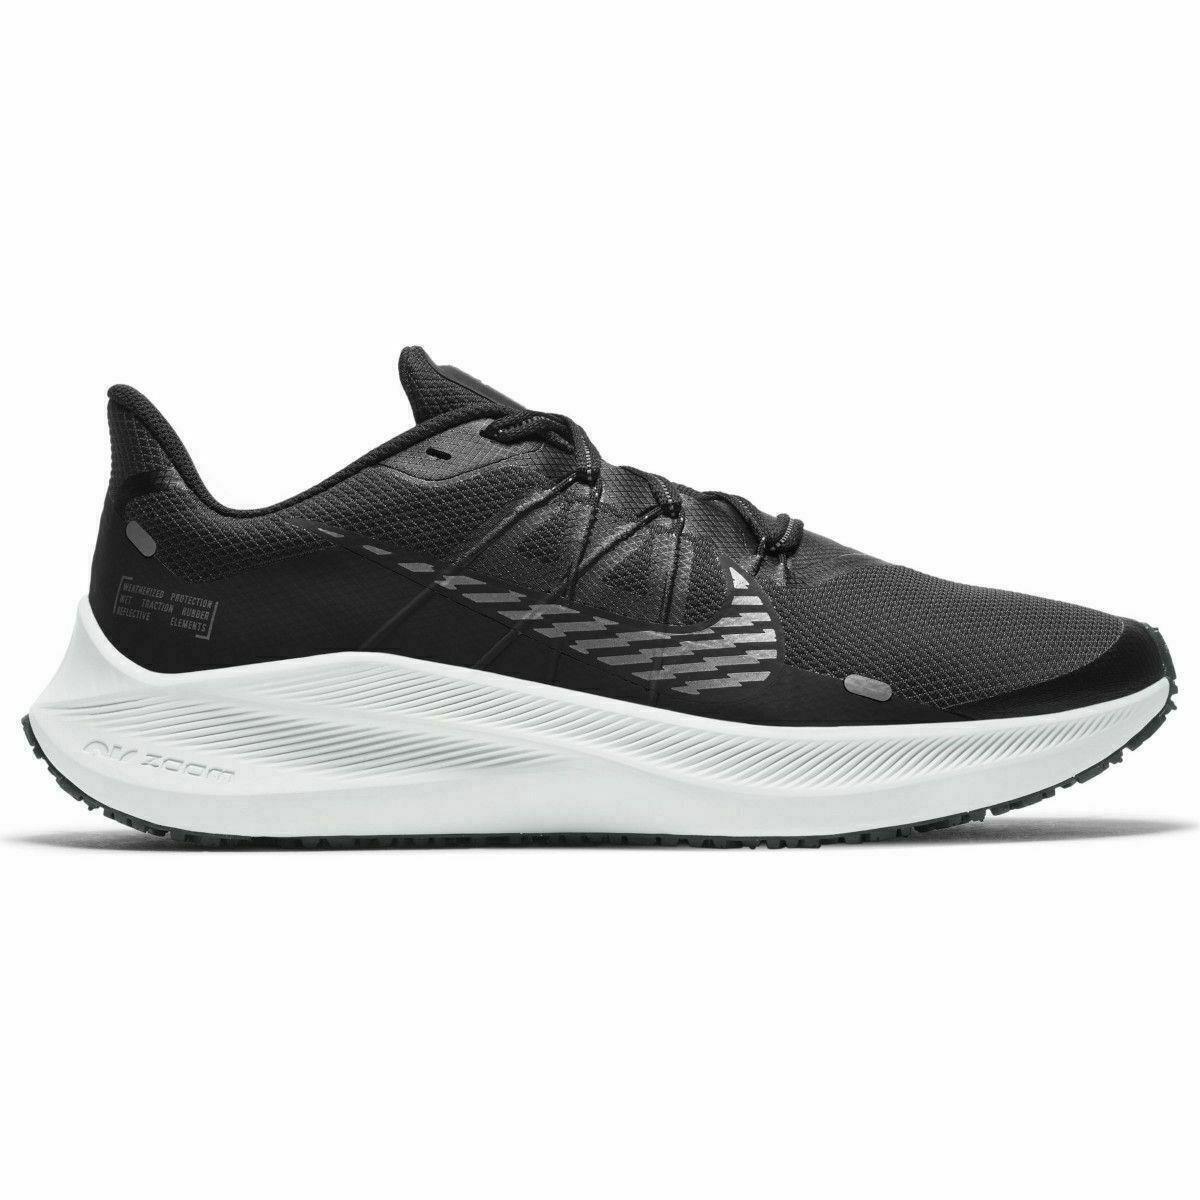 Nike Womens Winflo 7 Shield Running Shoes CU3868 001 - BLACK MTLC COOL GREY OFF NOIR